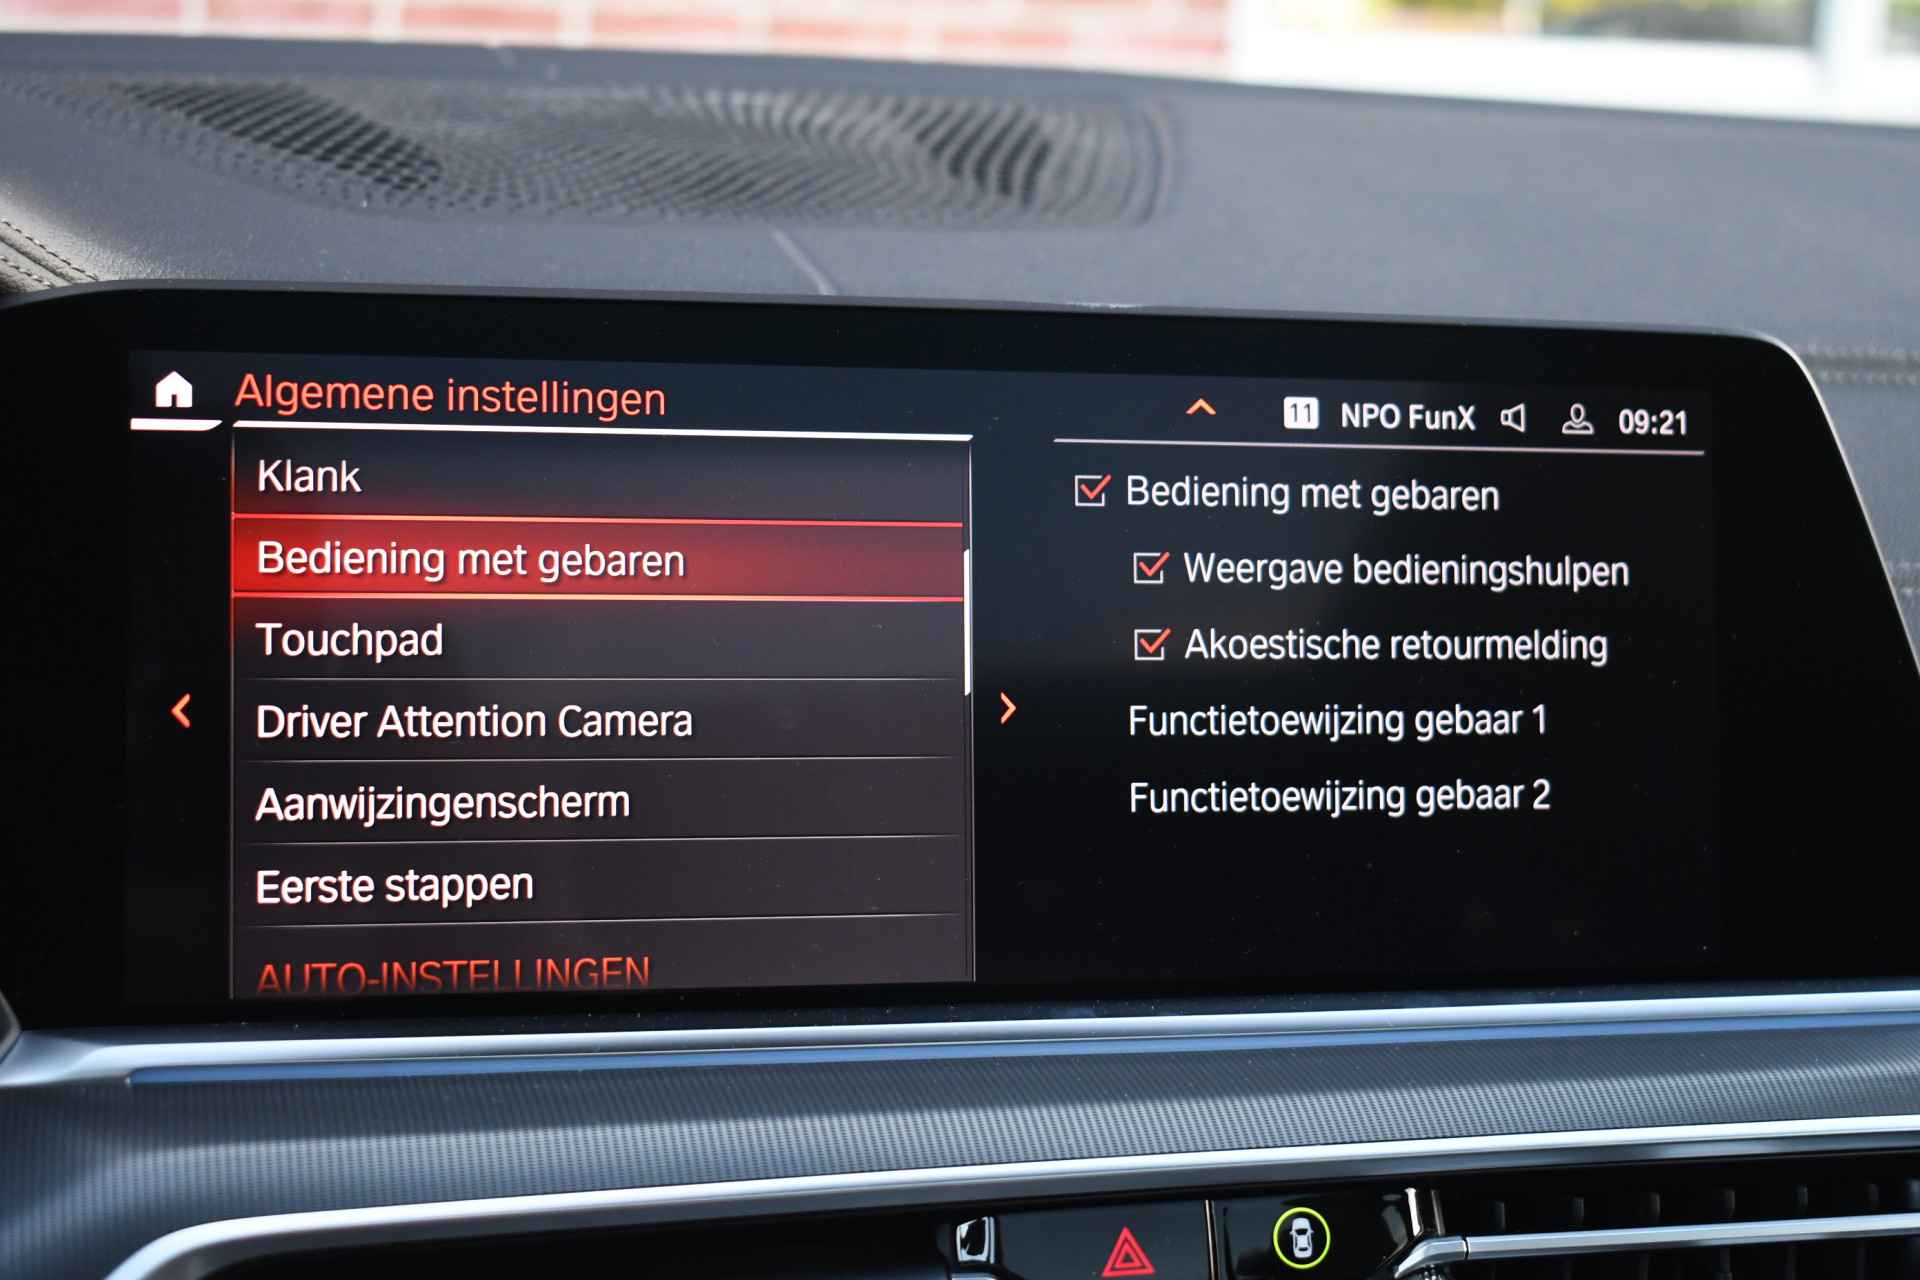 06U8 BMW Gesture Control (Gebarenbesturing)